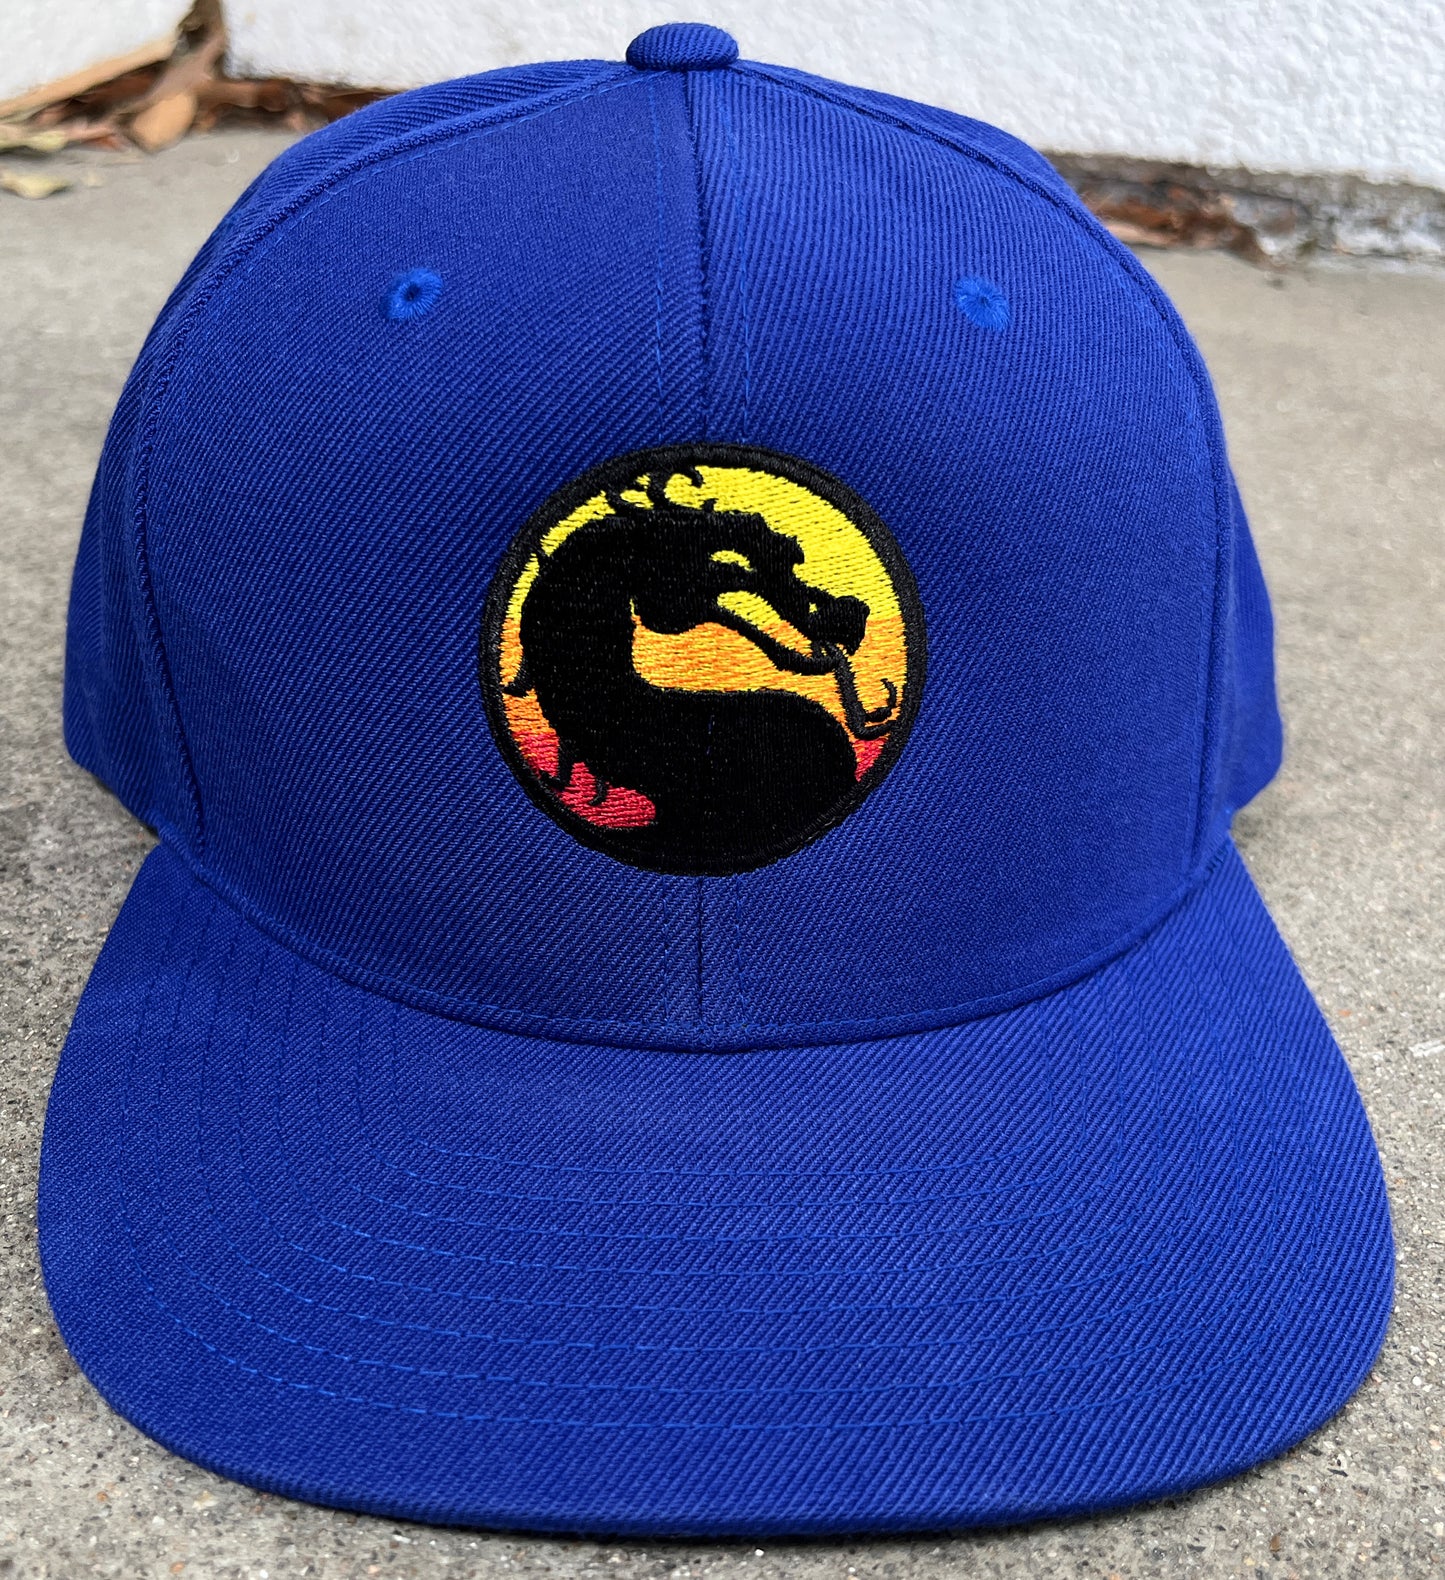 dragon embroidered snapback hat - ROYAL BLUE